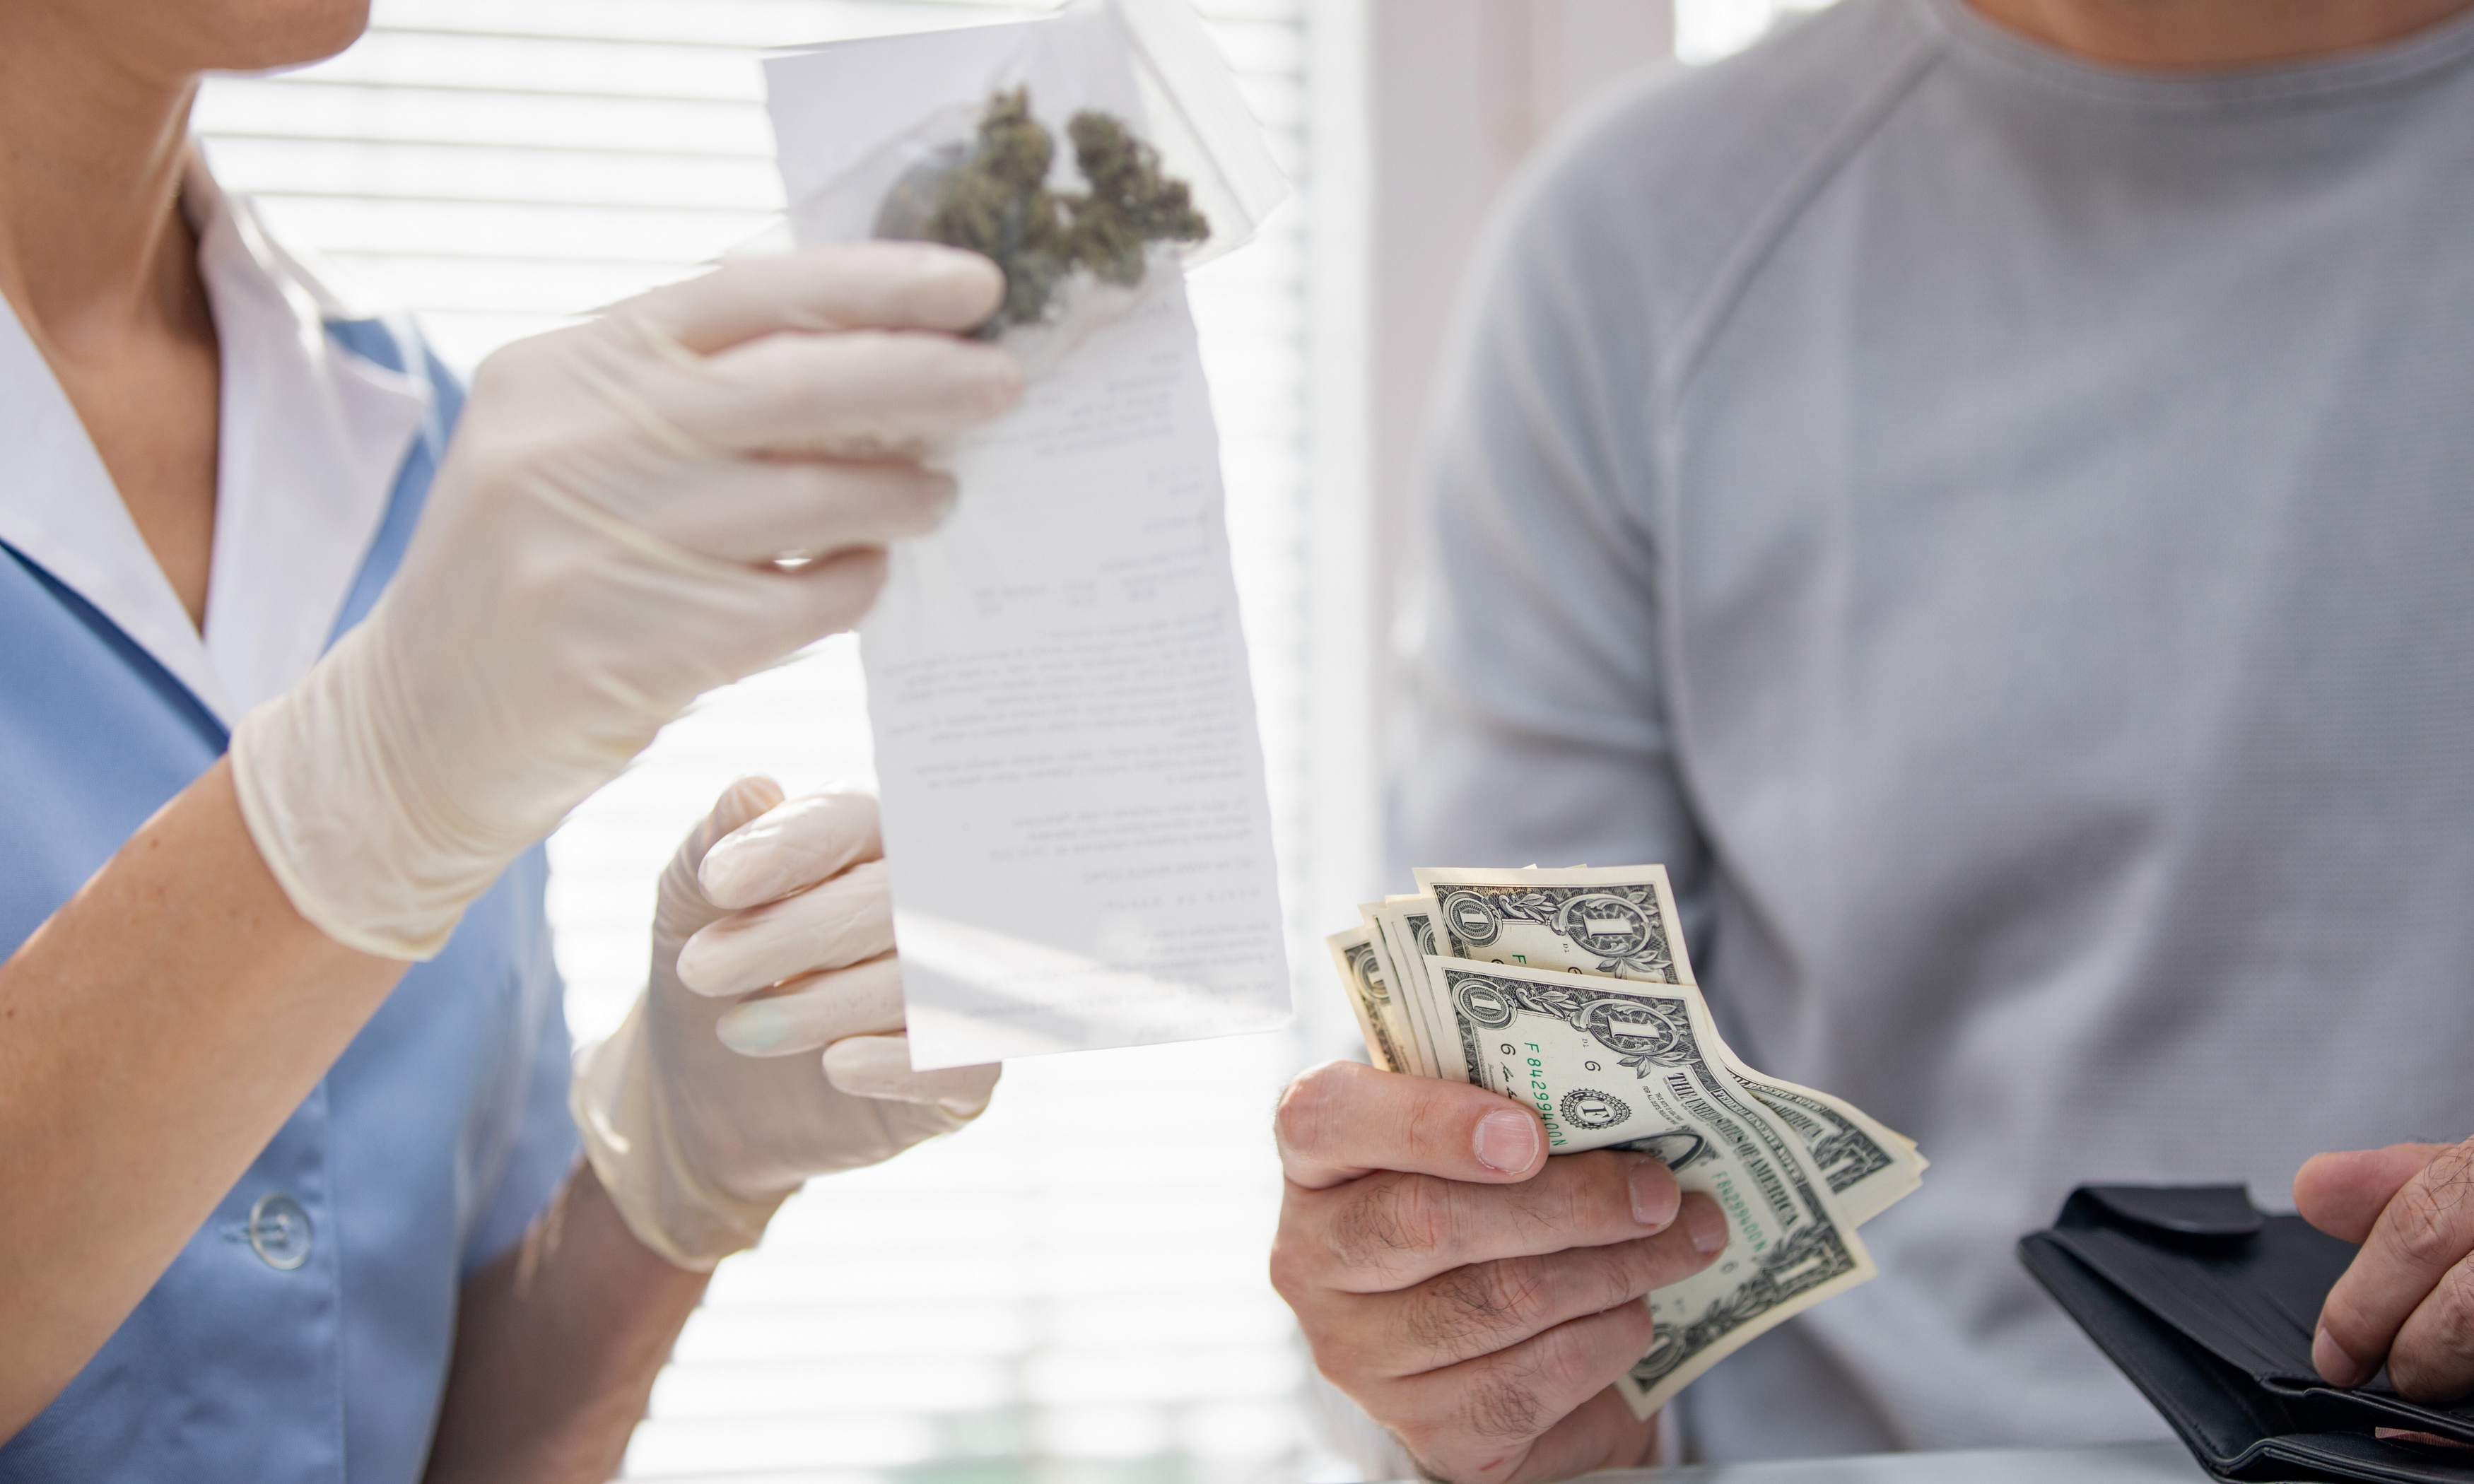 Buy Legal Cannabis in NJ